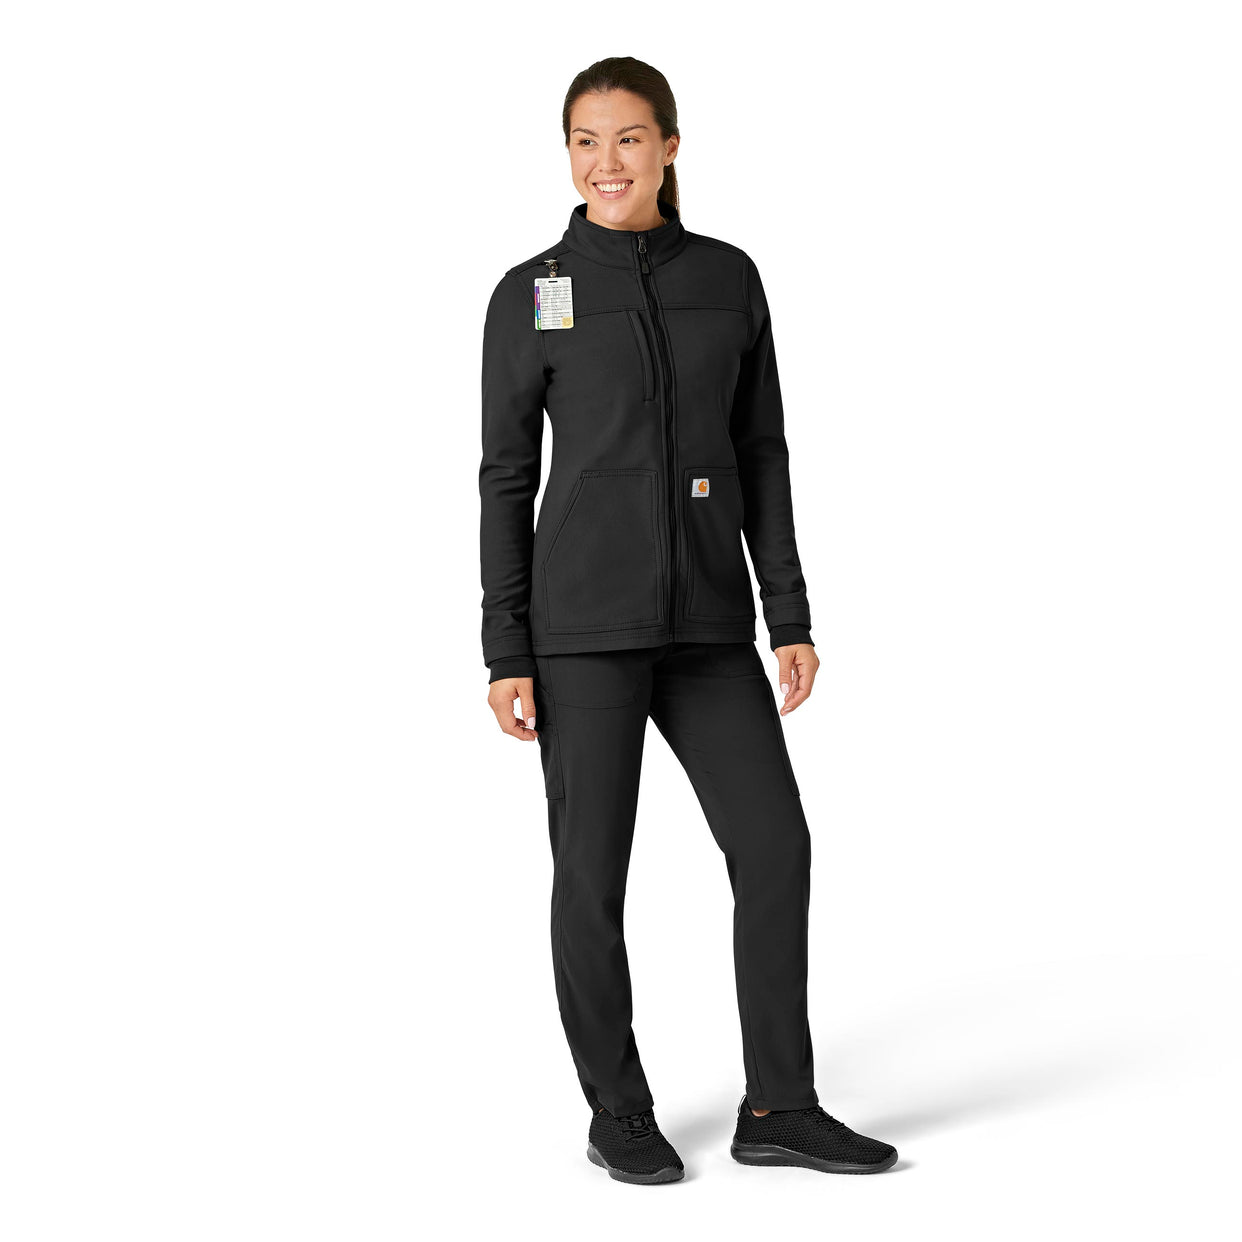 Rugged Flex Peak Women's Bonded Fleece Jacket Black full scrub set